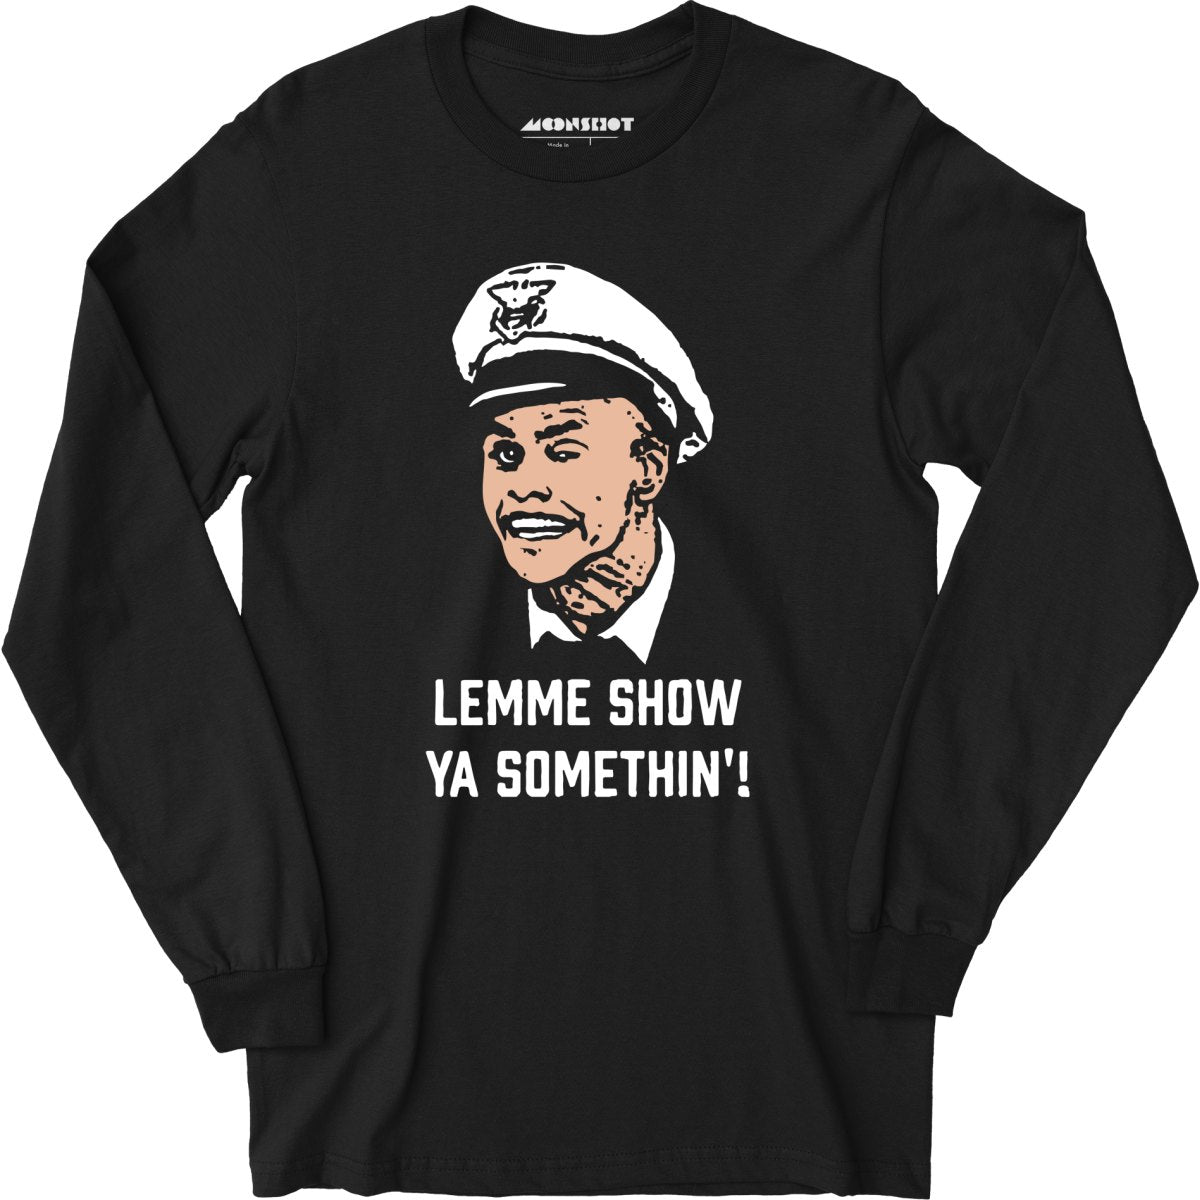 Lemme Show Ya Somethin'! - Long Sleeve T-Shirt